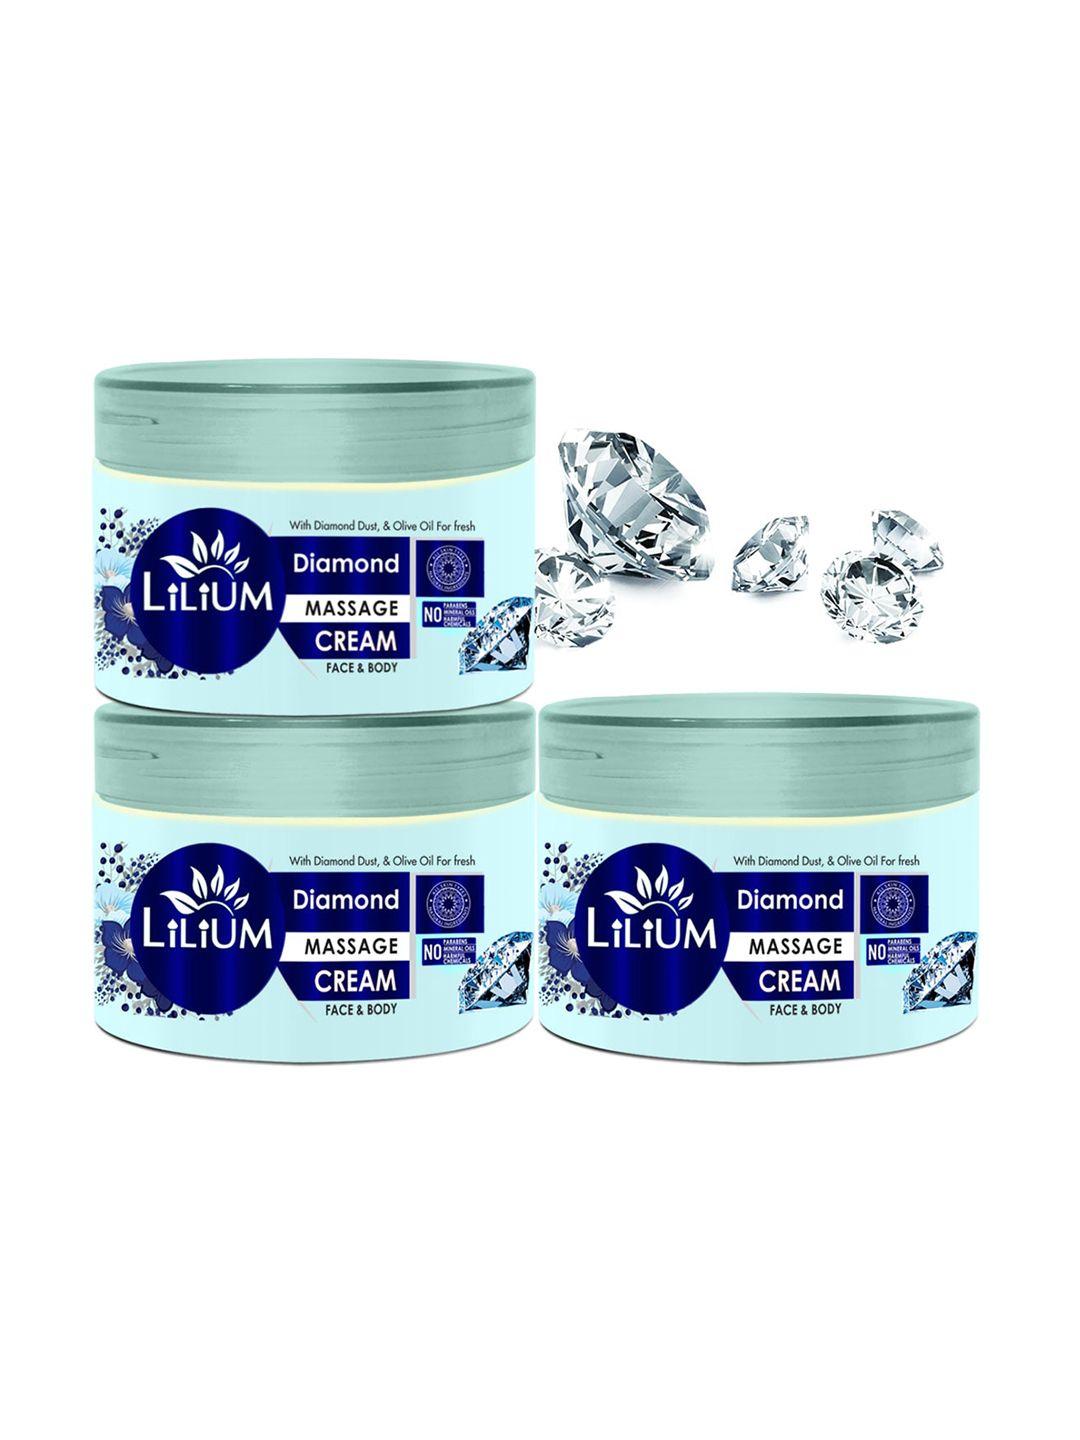 lilium set of 3 massage cream with diamond -250gm